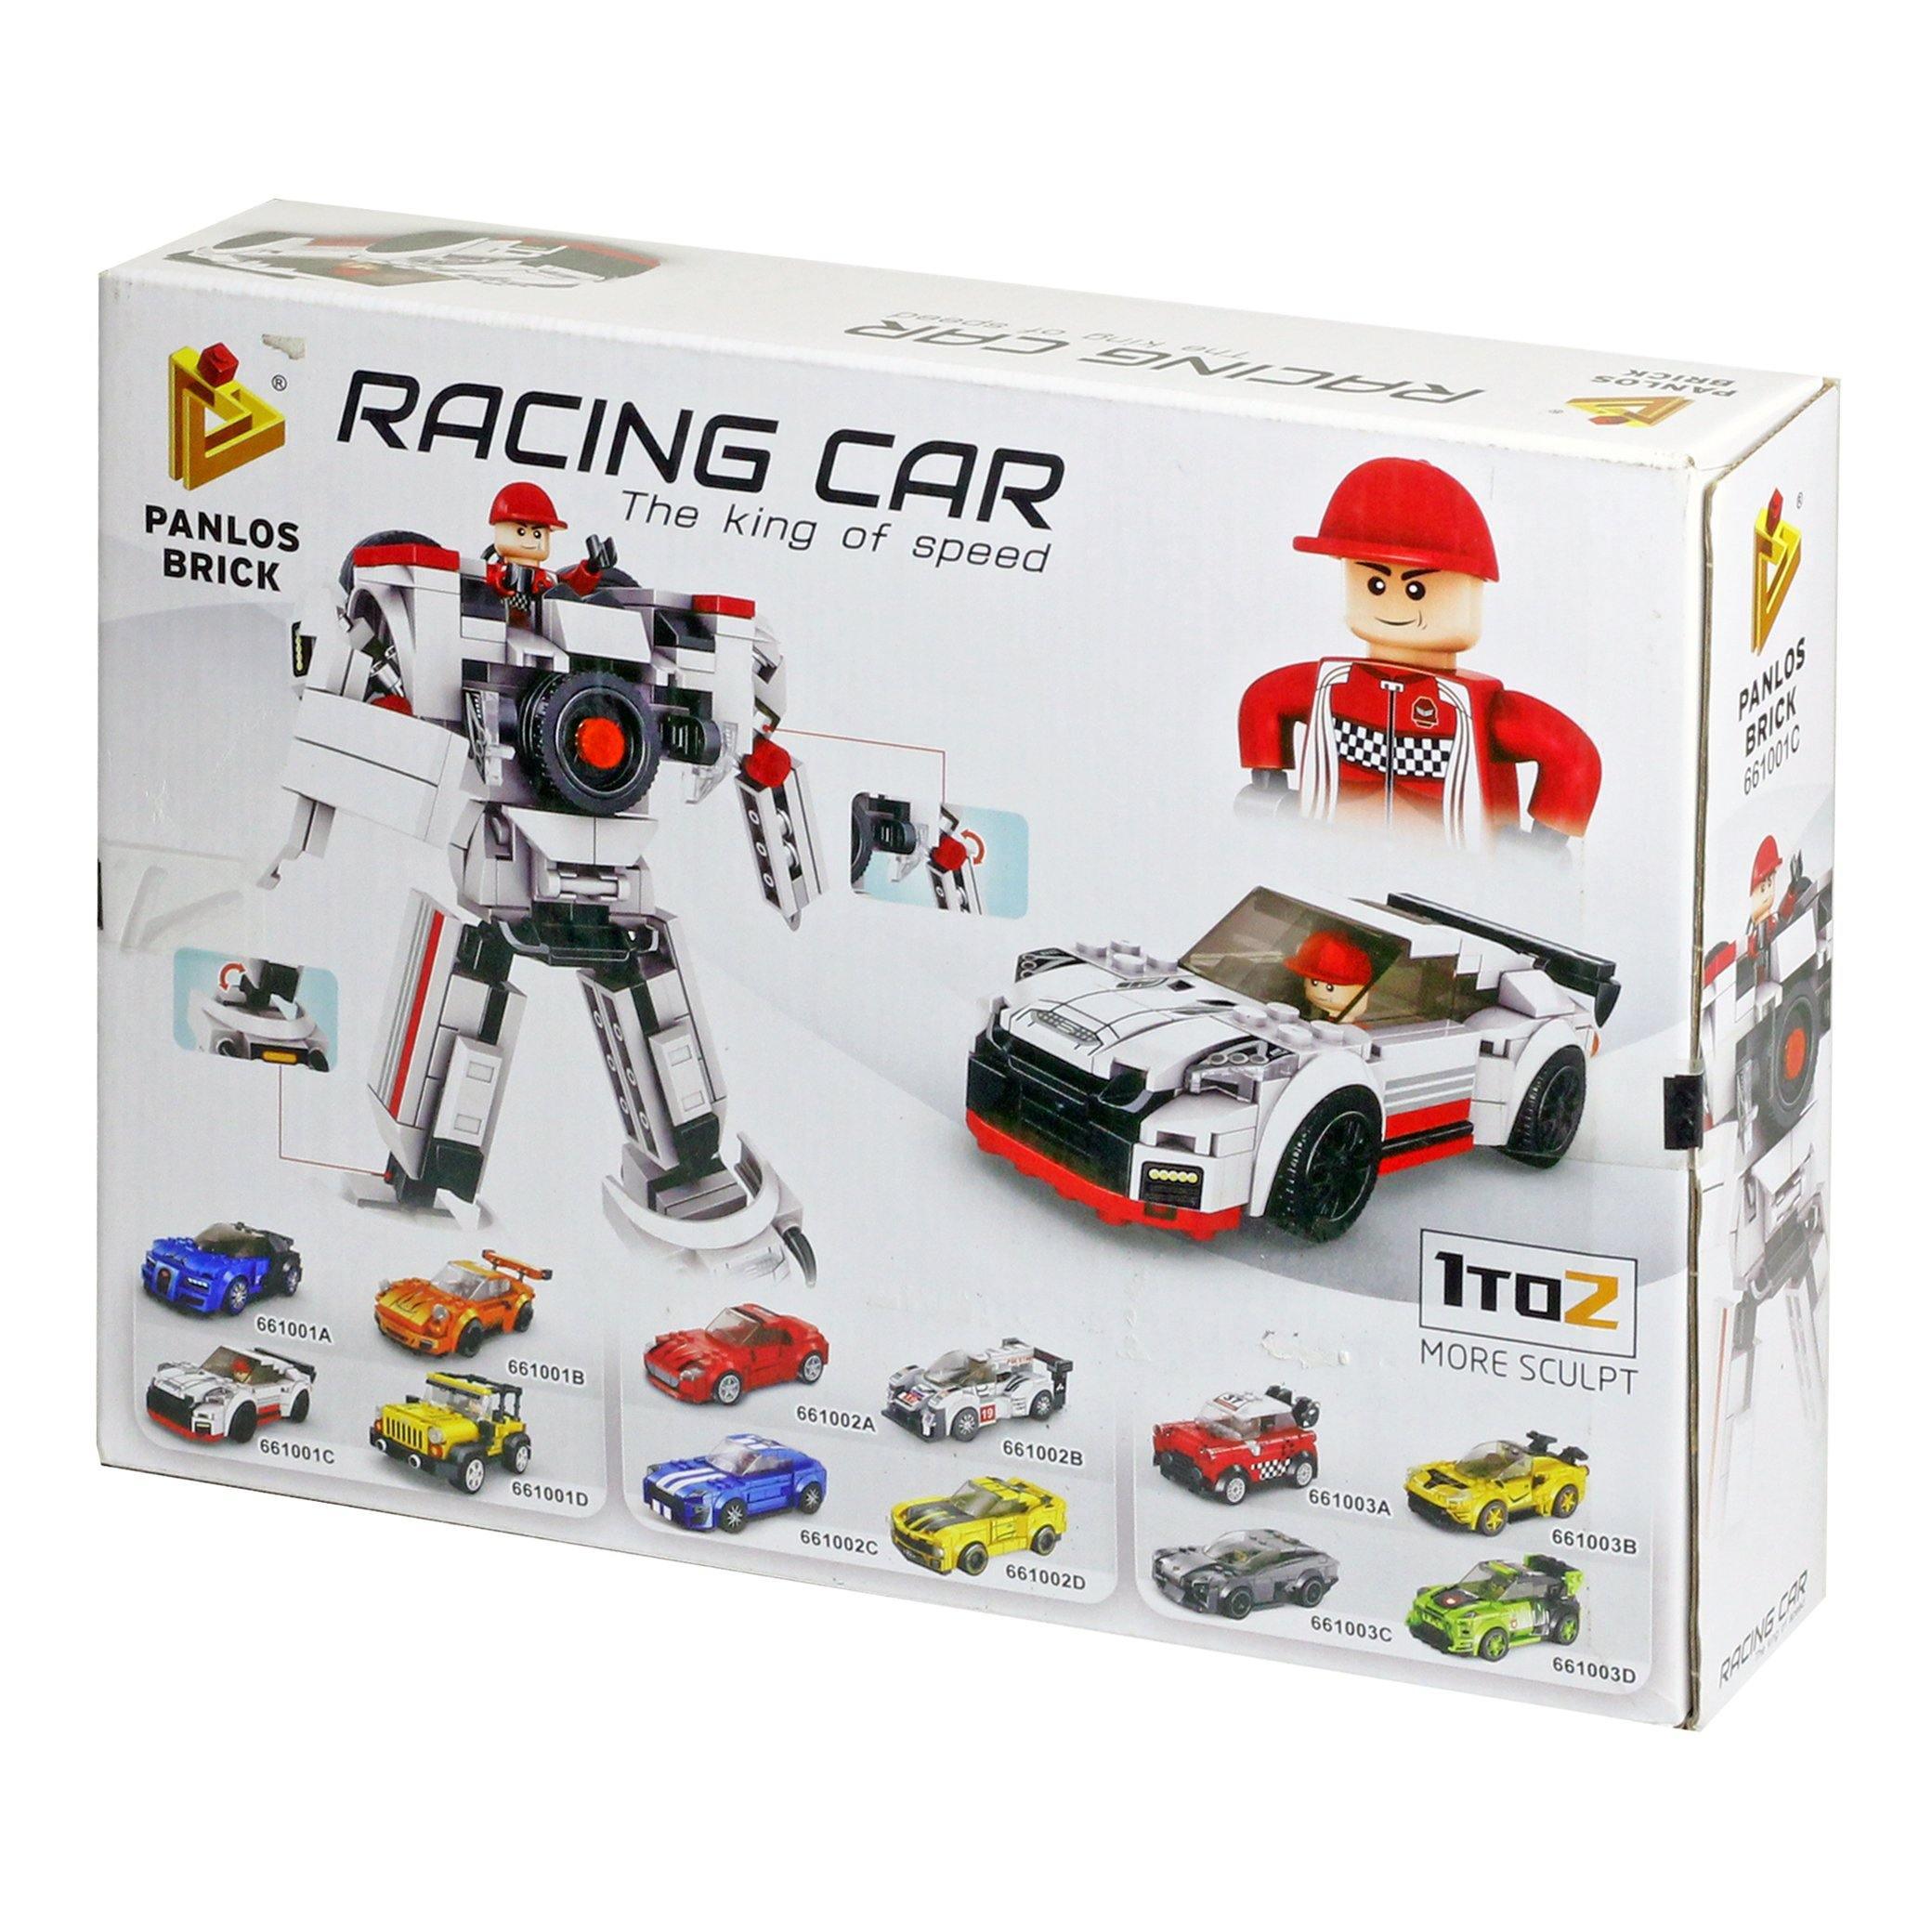 Panlos Brick Racing Car Building Blocks 237 Pieces - BumbleToys - 5-7 Years, Boys, LEGO, Toy Land